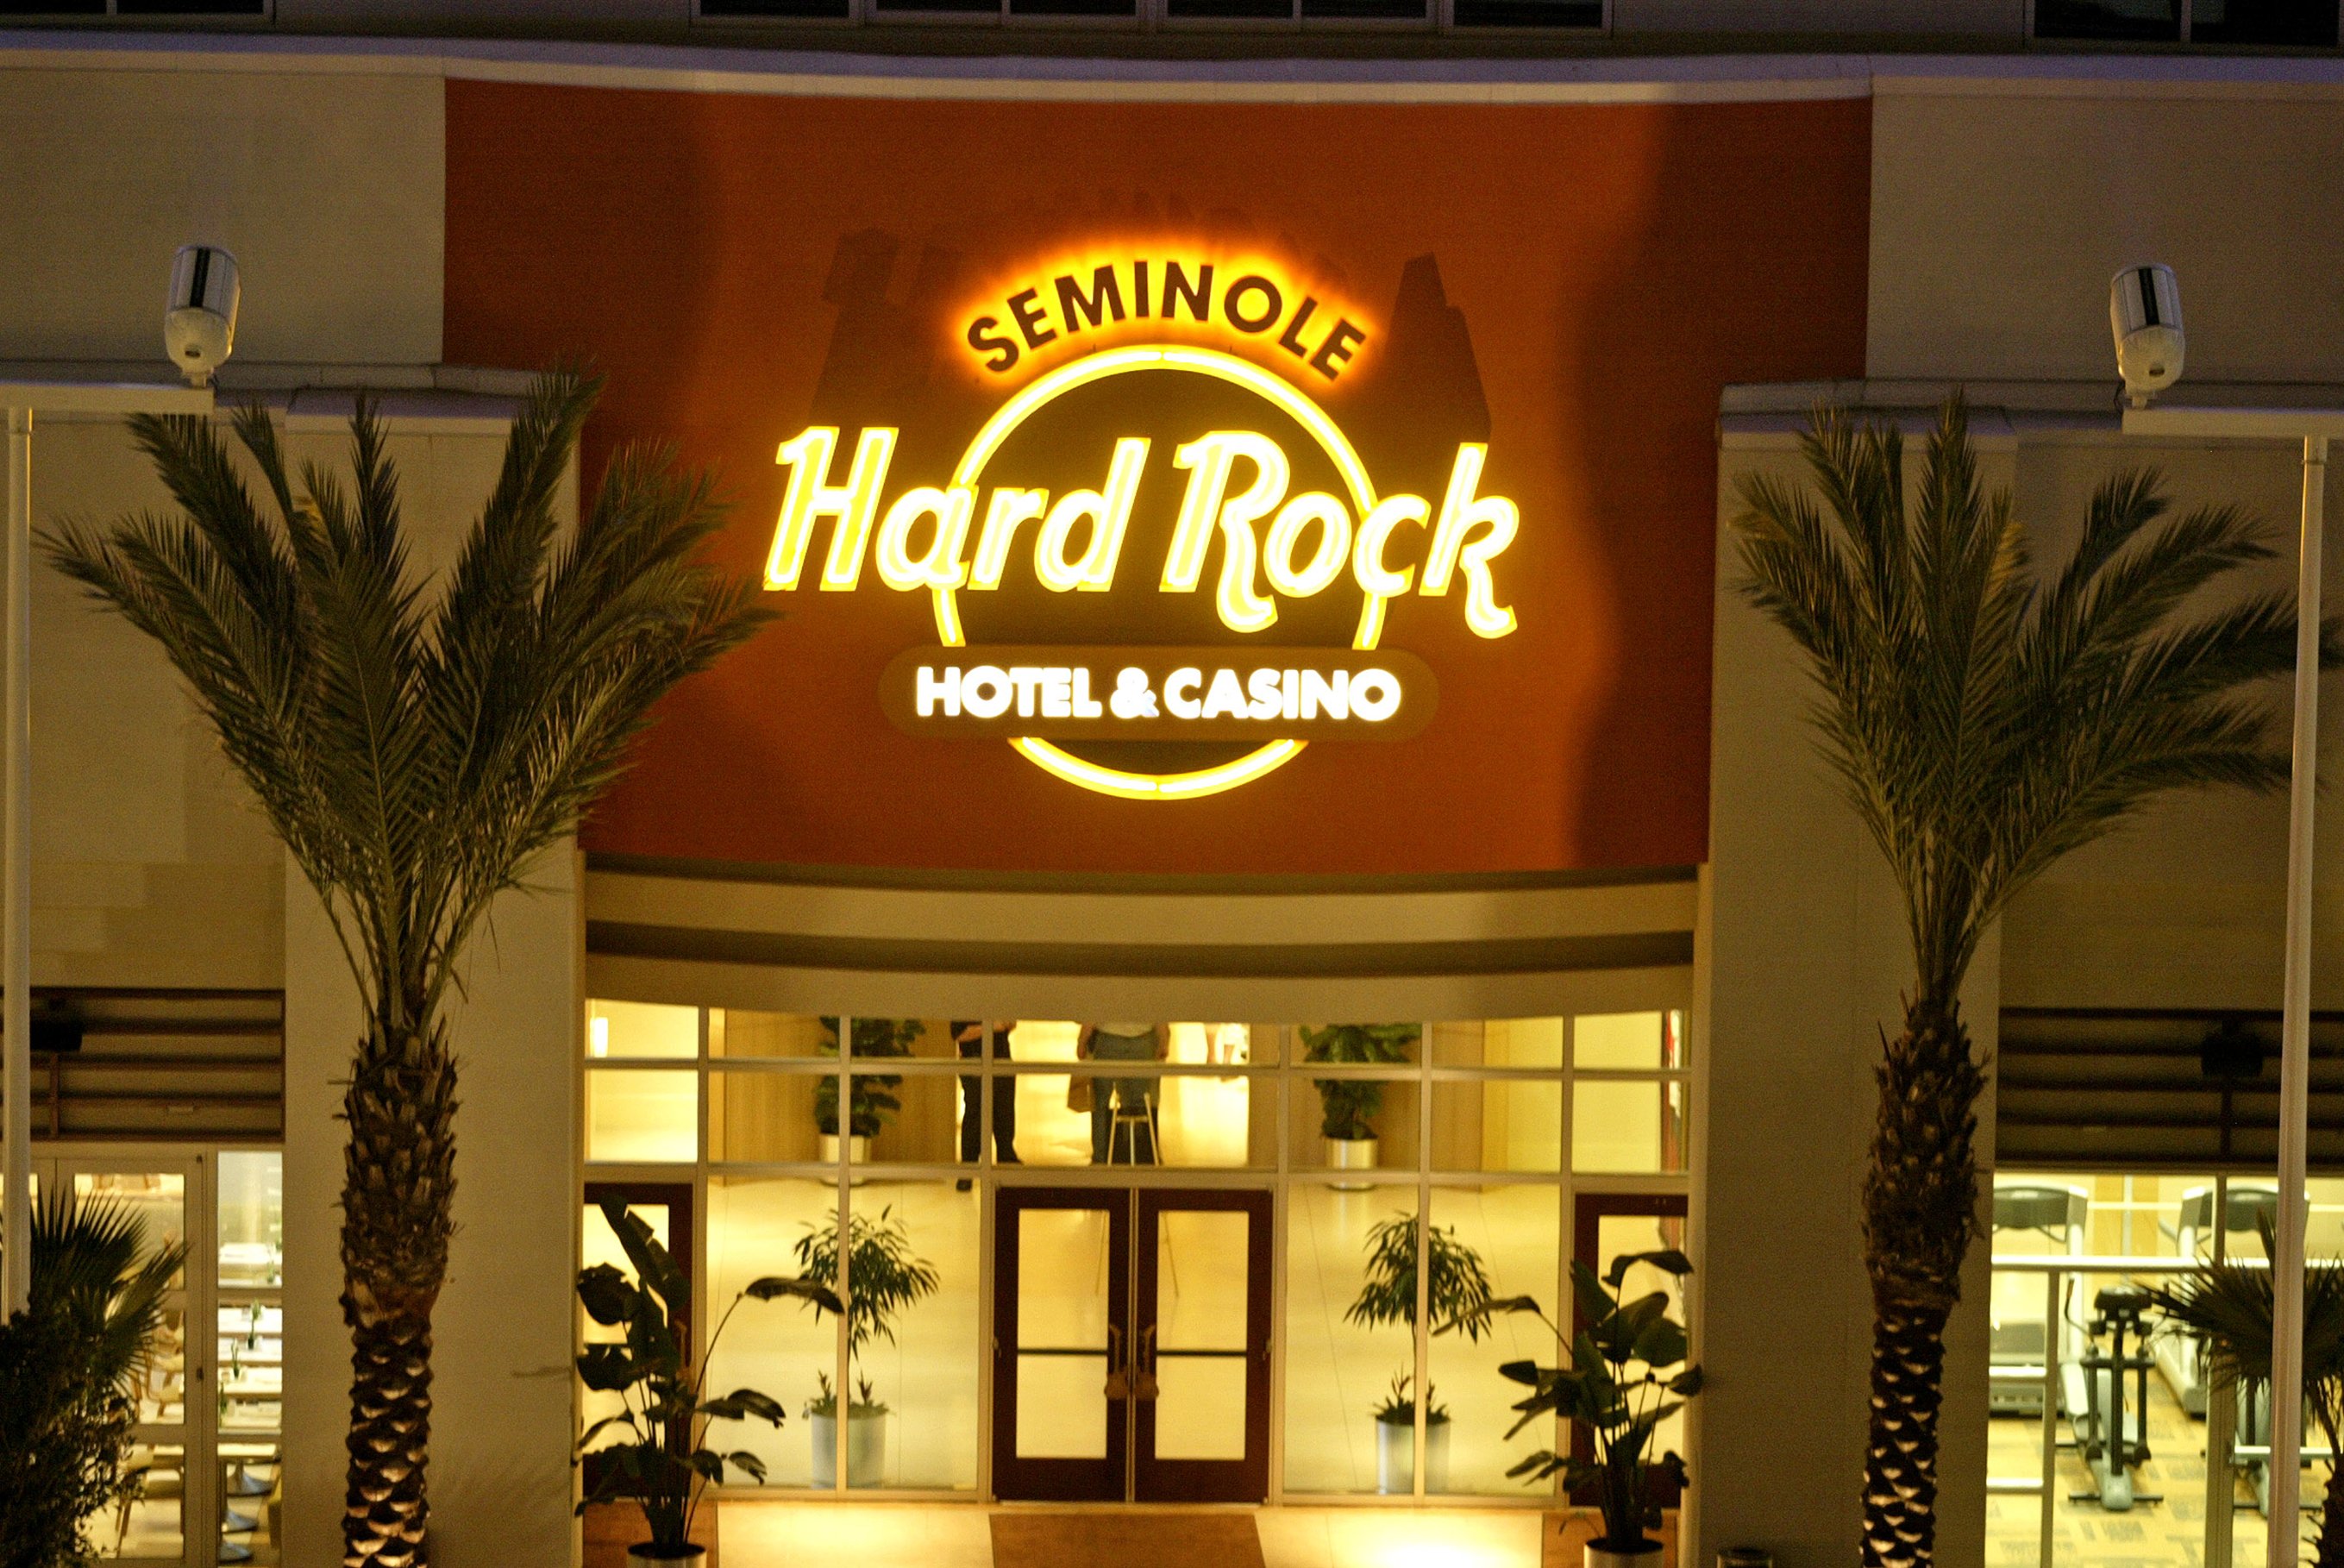 Seminole hard rock casino coconut creek jobs